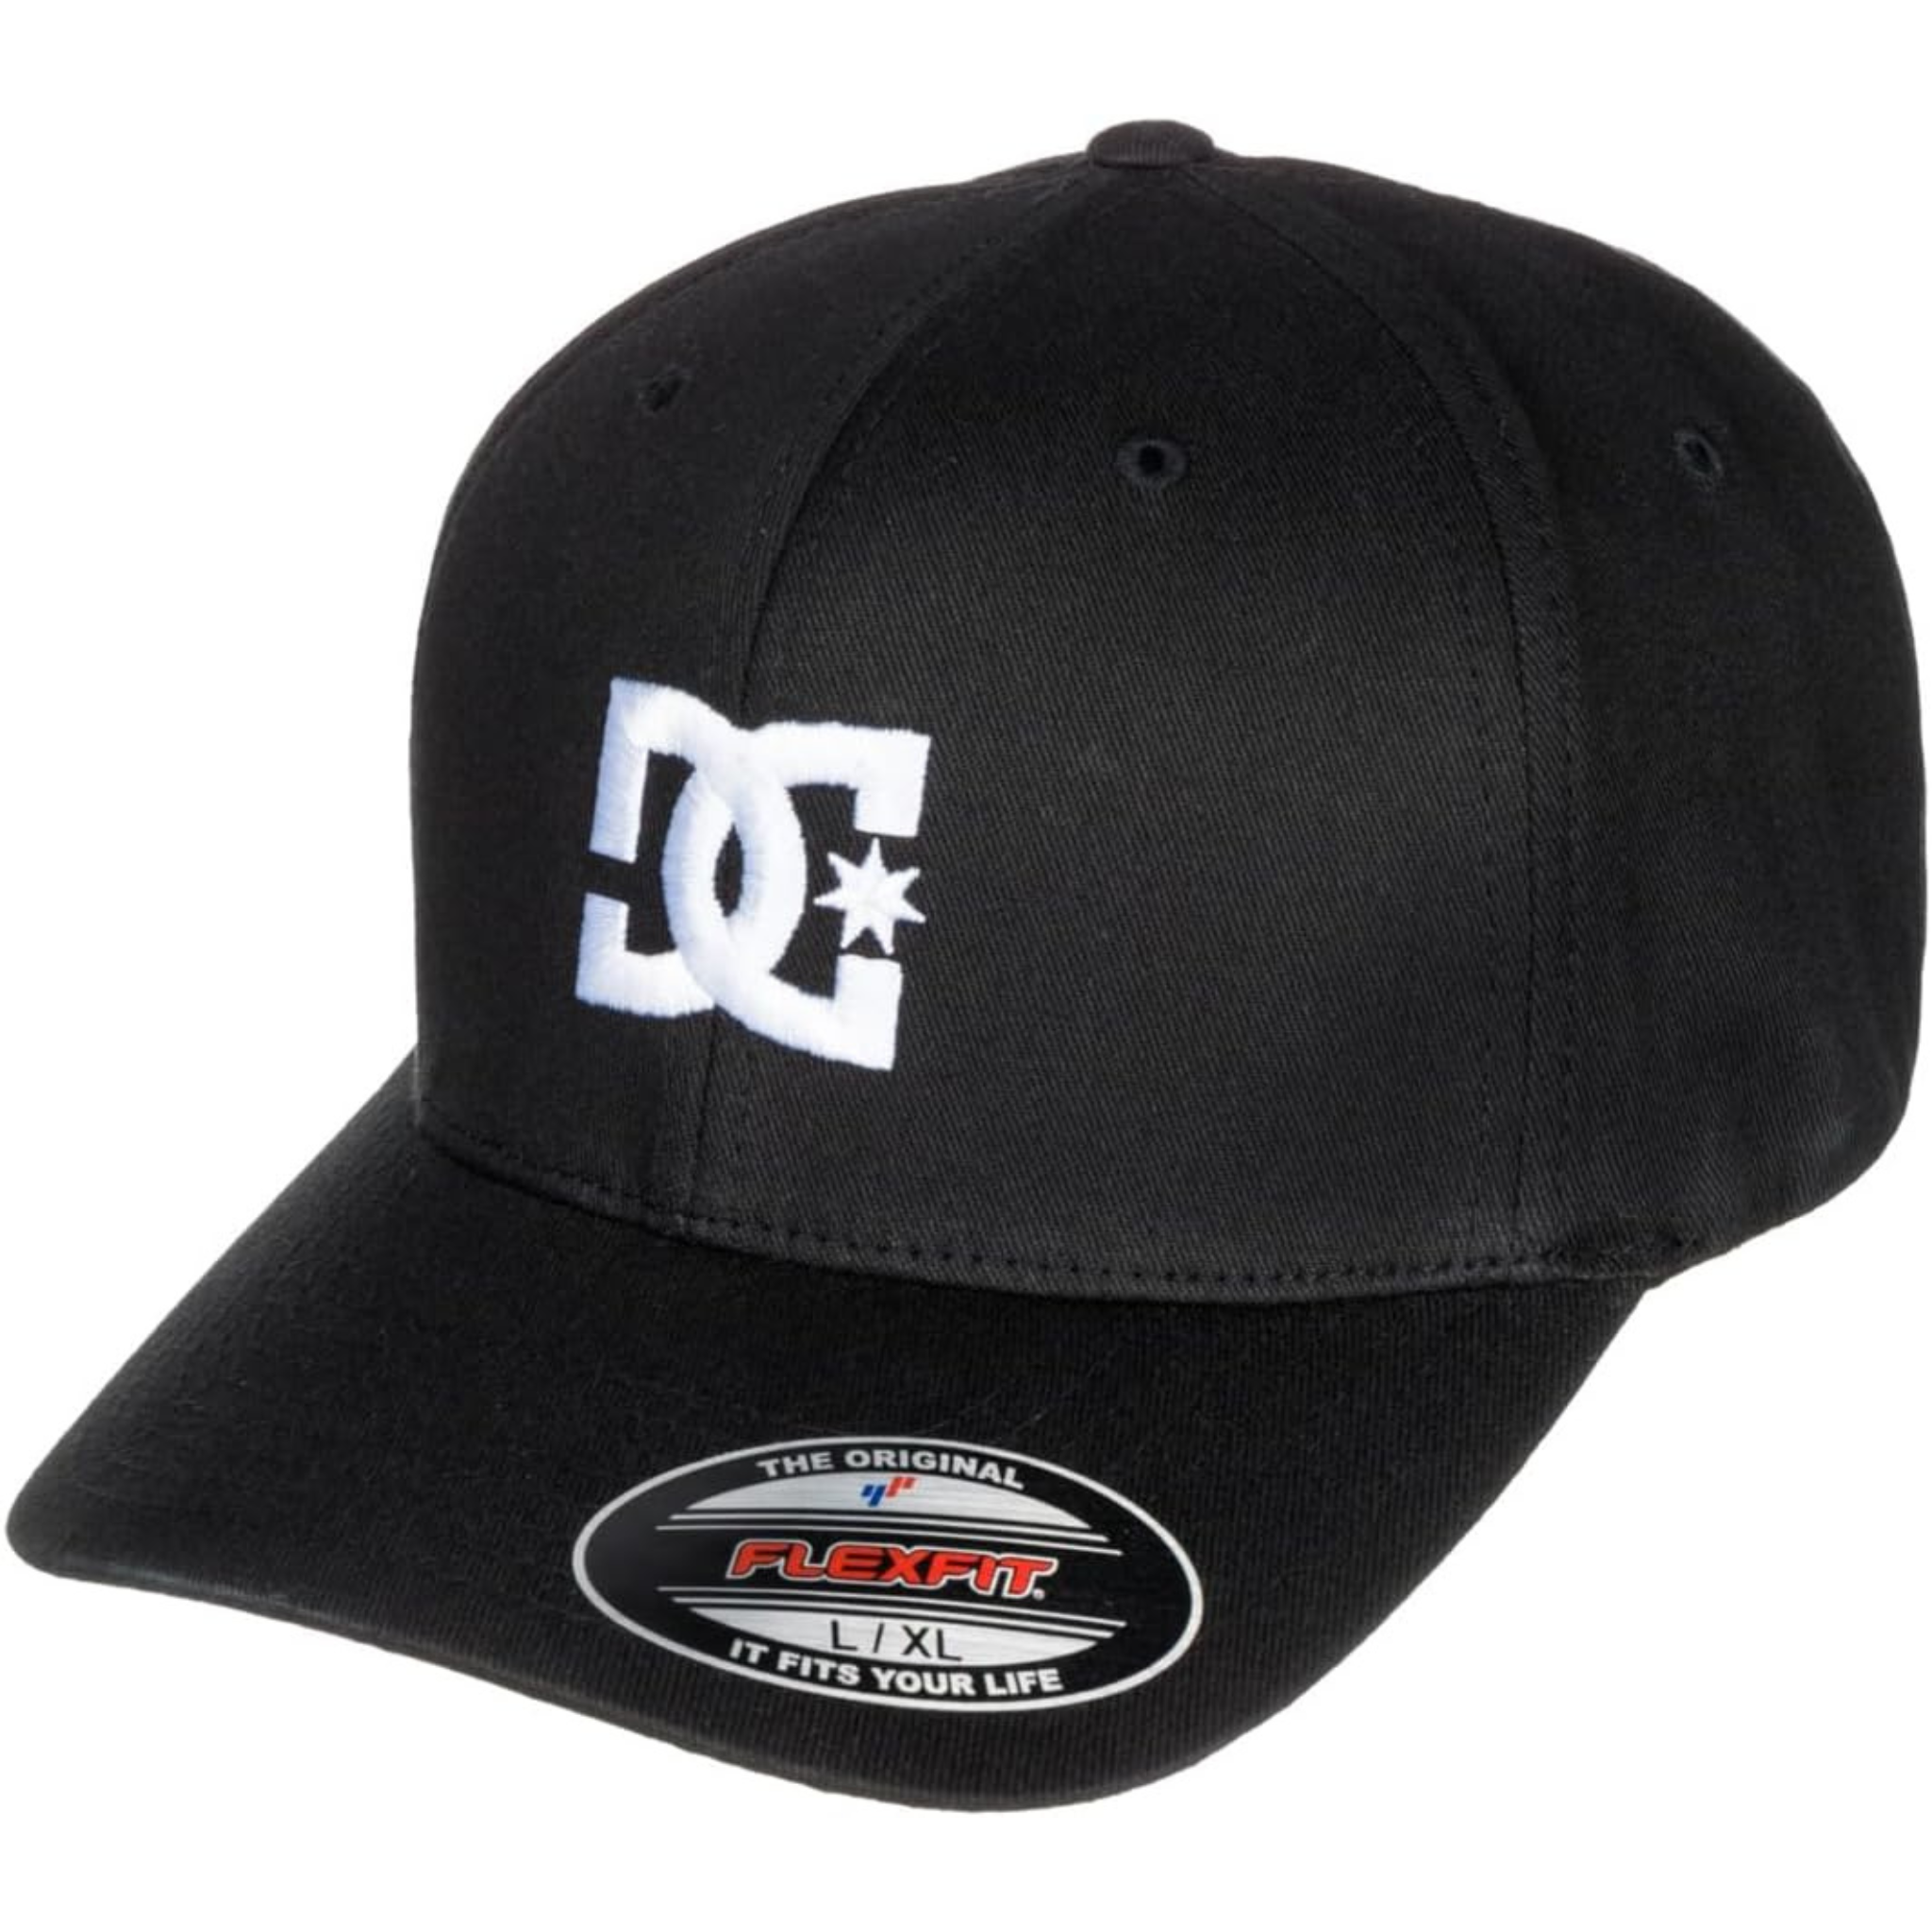 DC Men's Cap Star Flexfit Curve Brim Hat